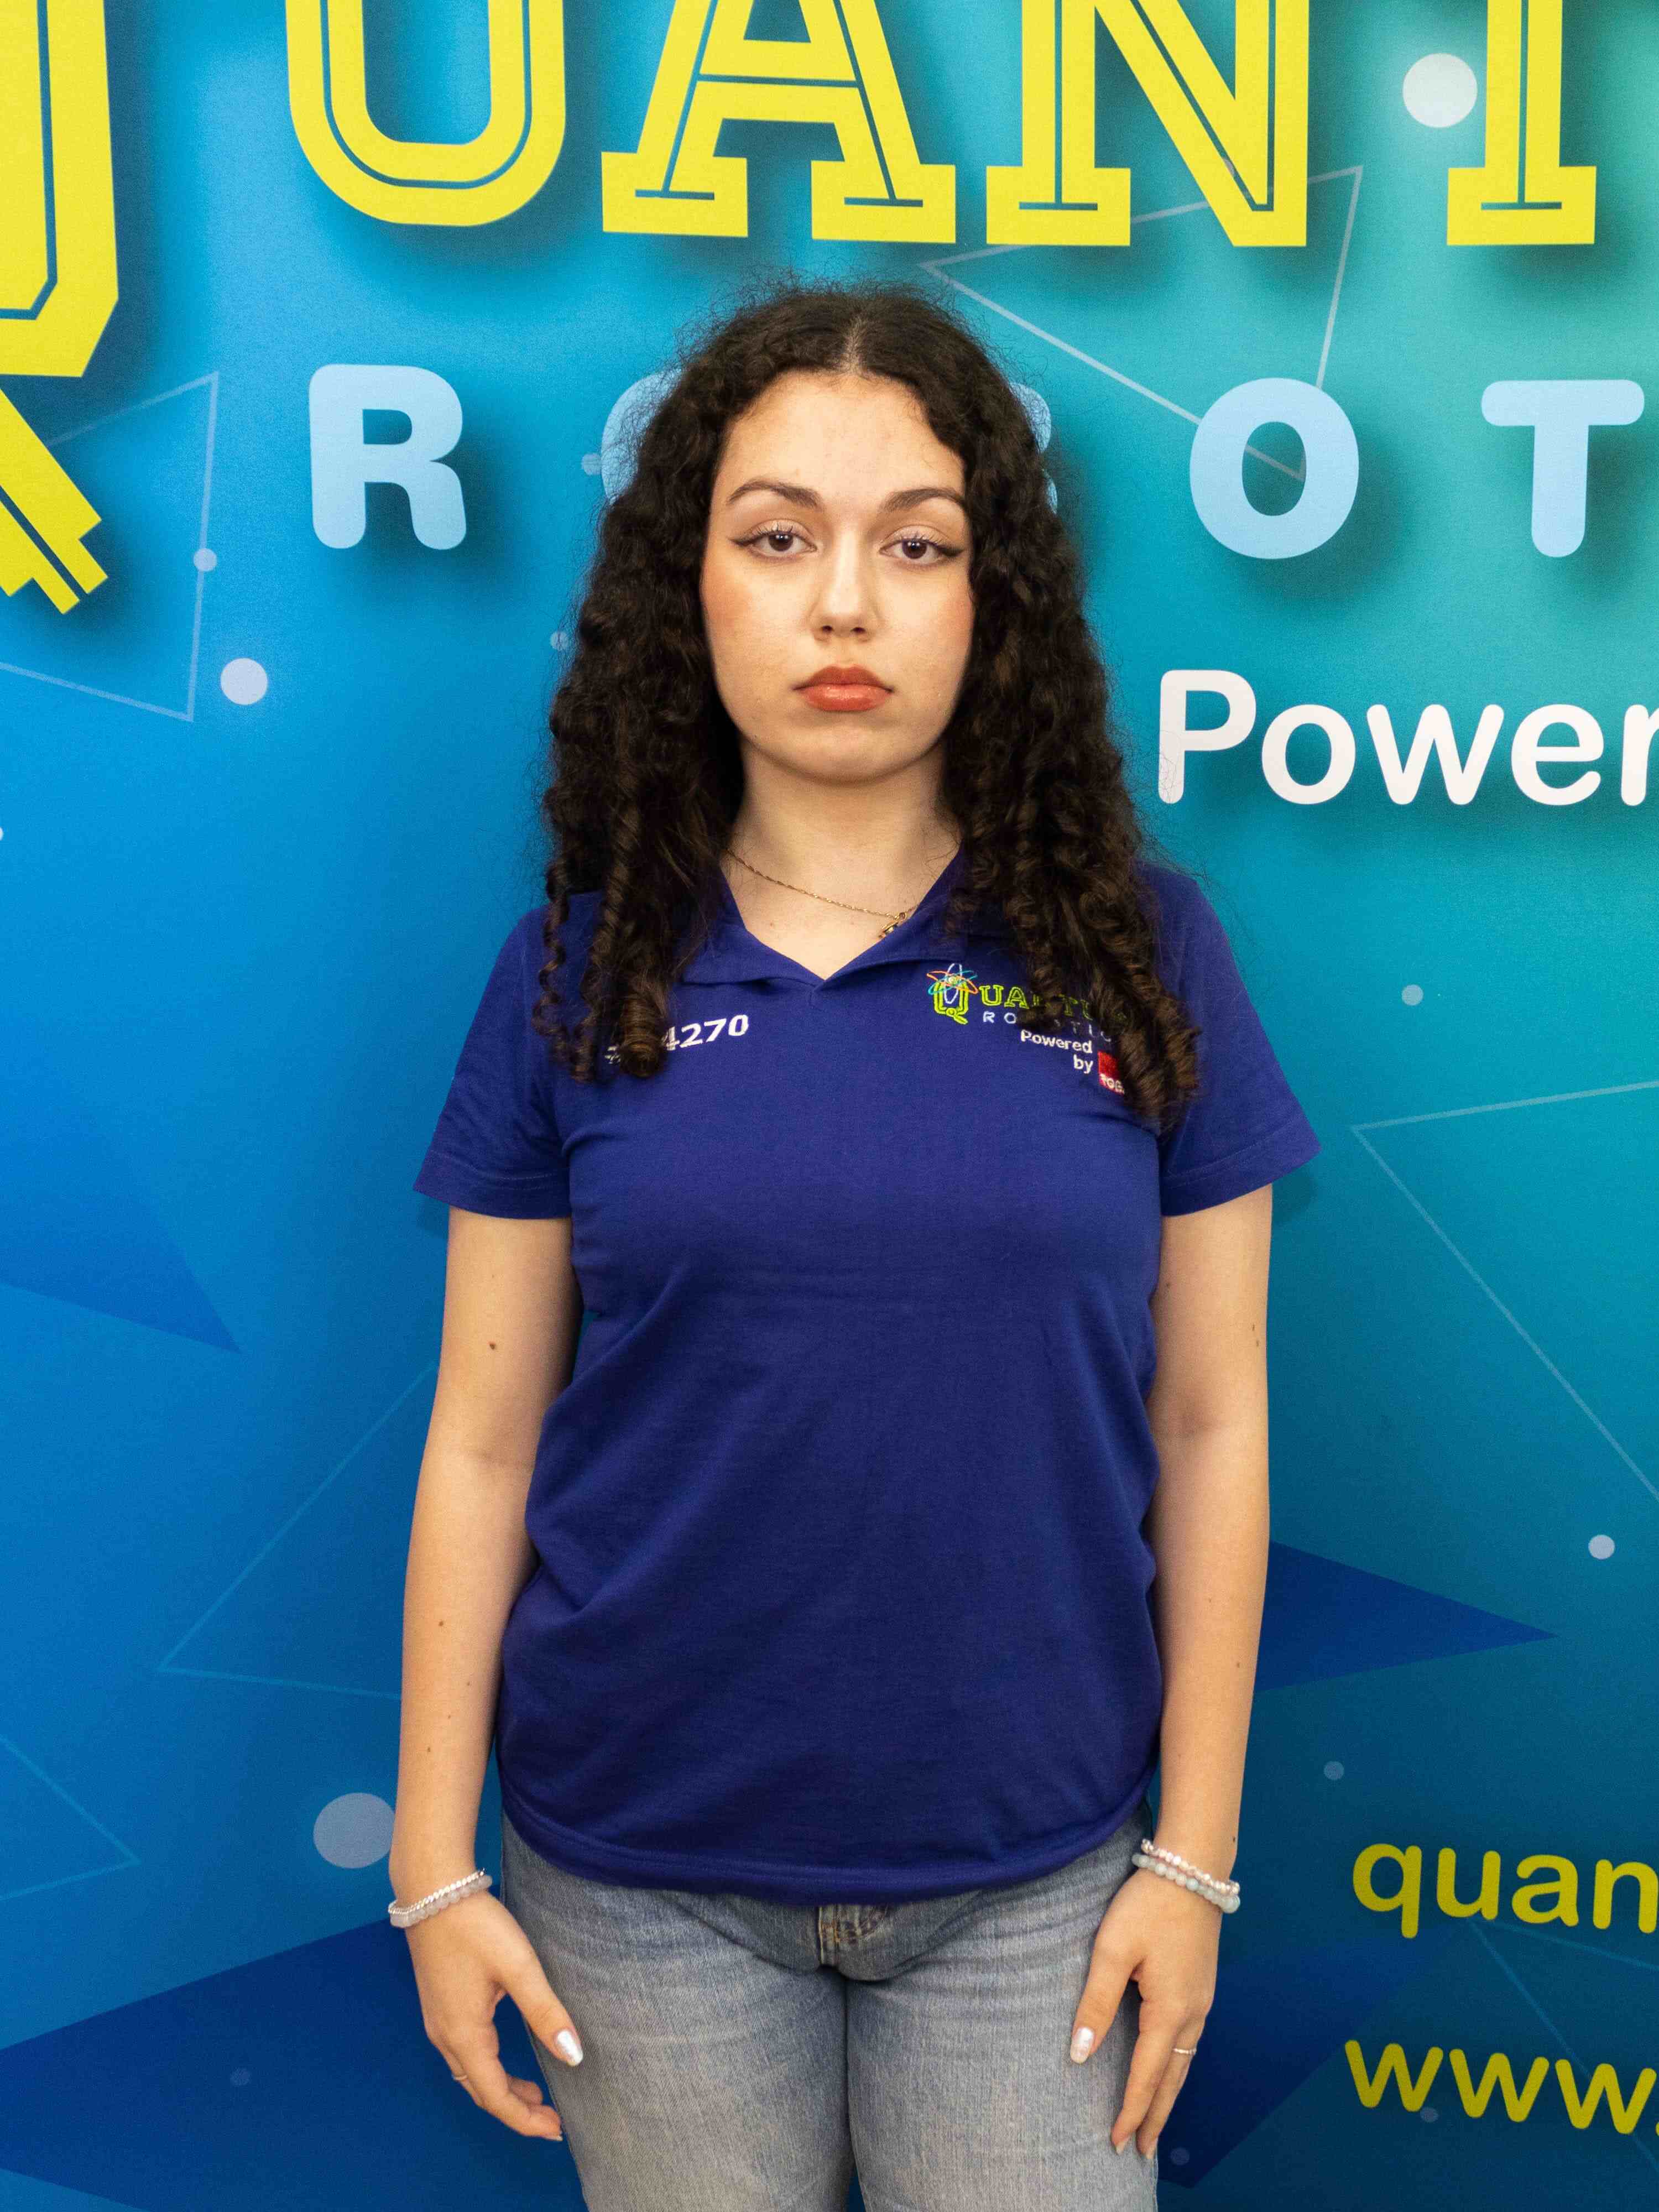 Quantum-Robotics-FTC-FIRST-competiton-team-members-Zehra-Bingol